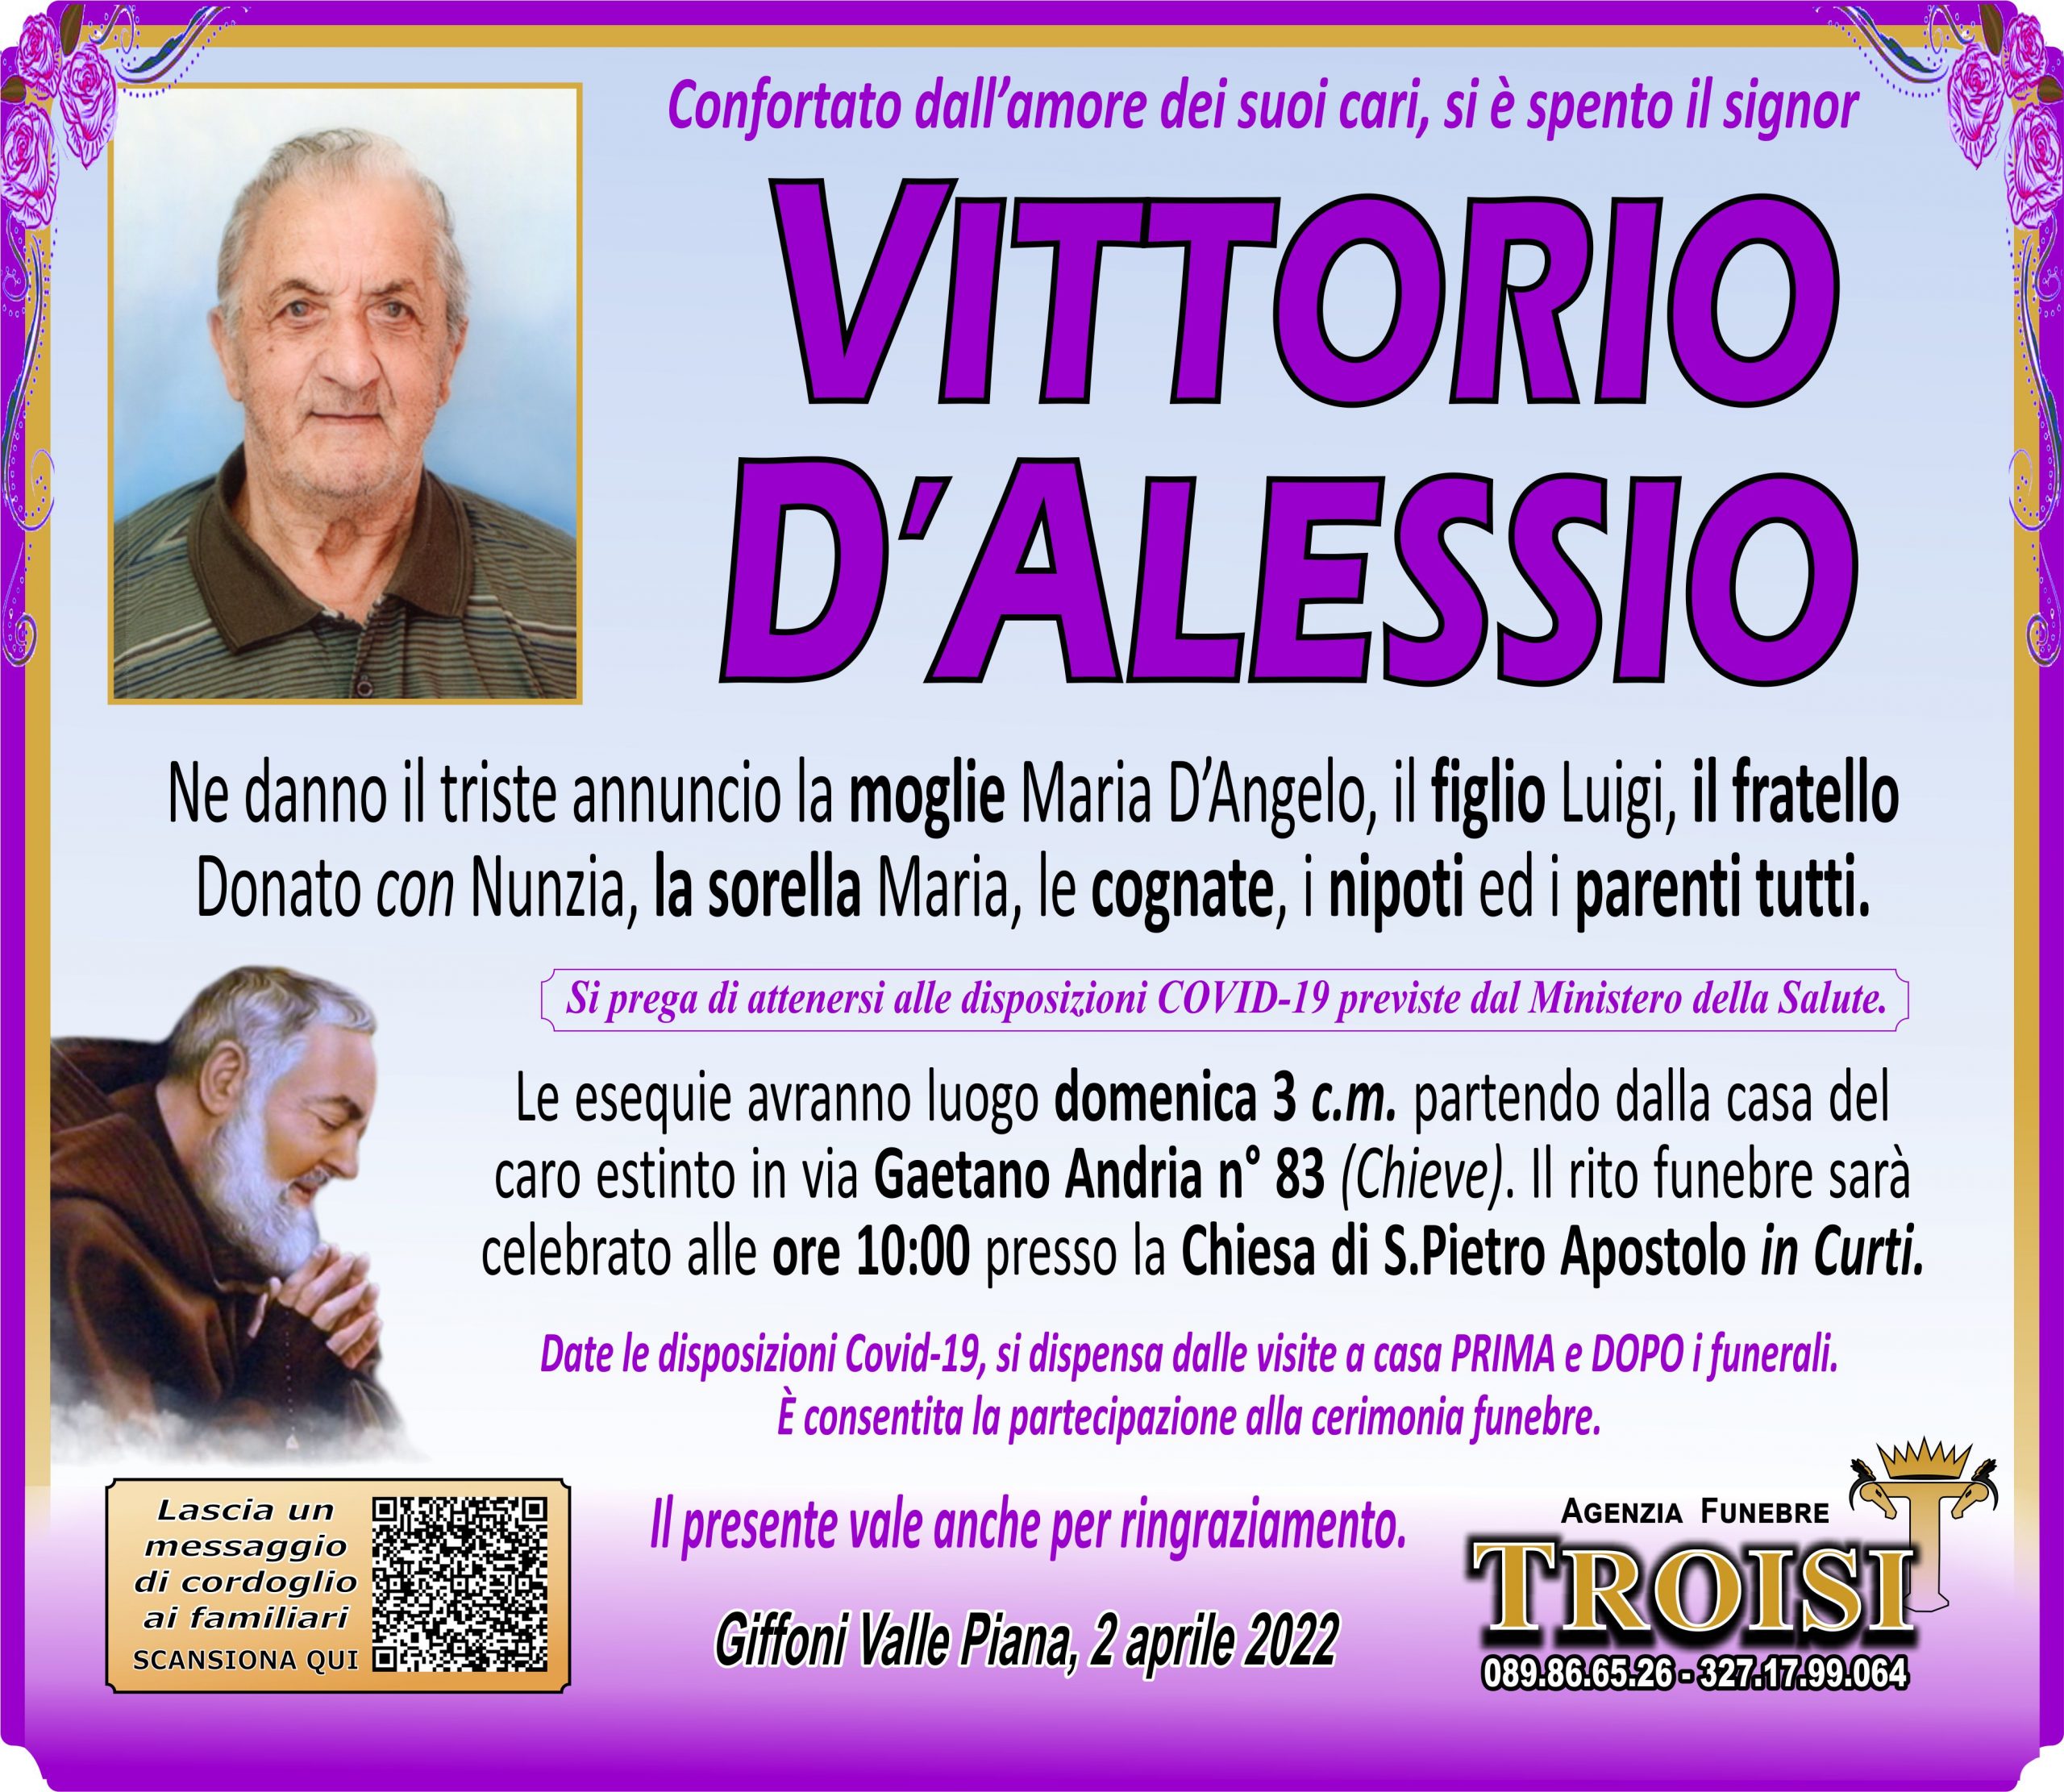 VITTORIO D’ALESSIO